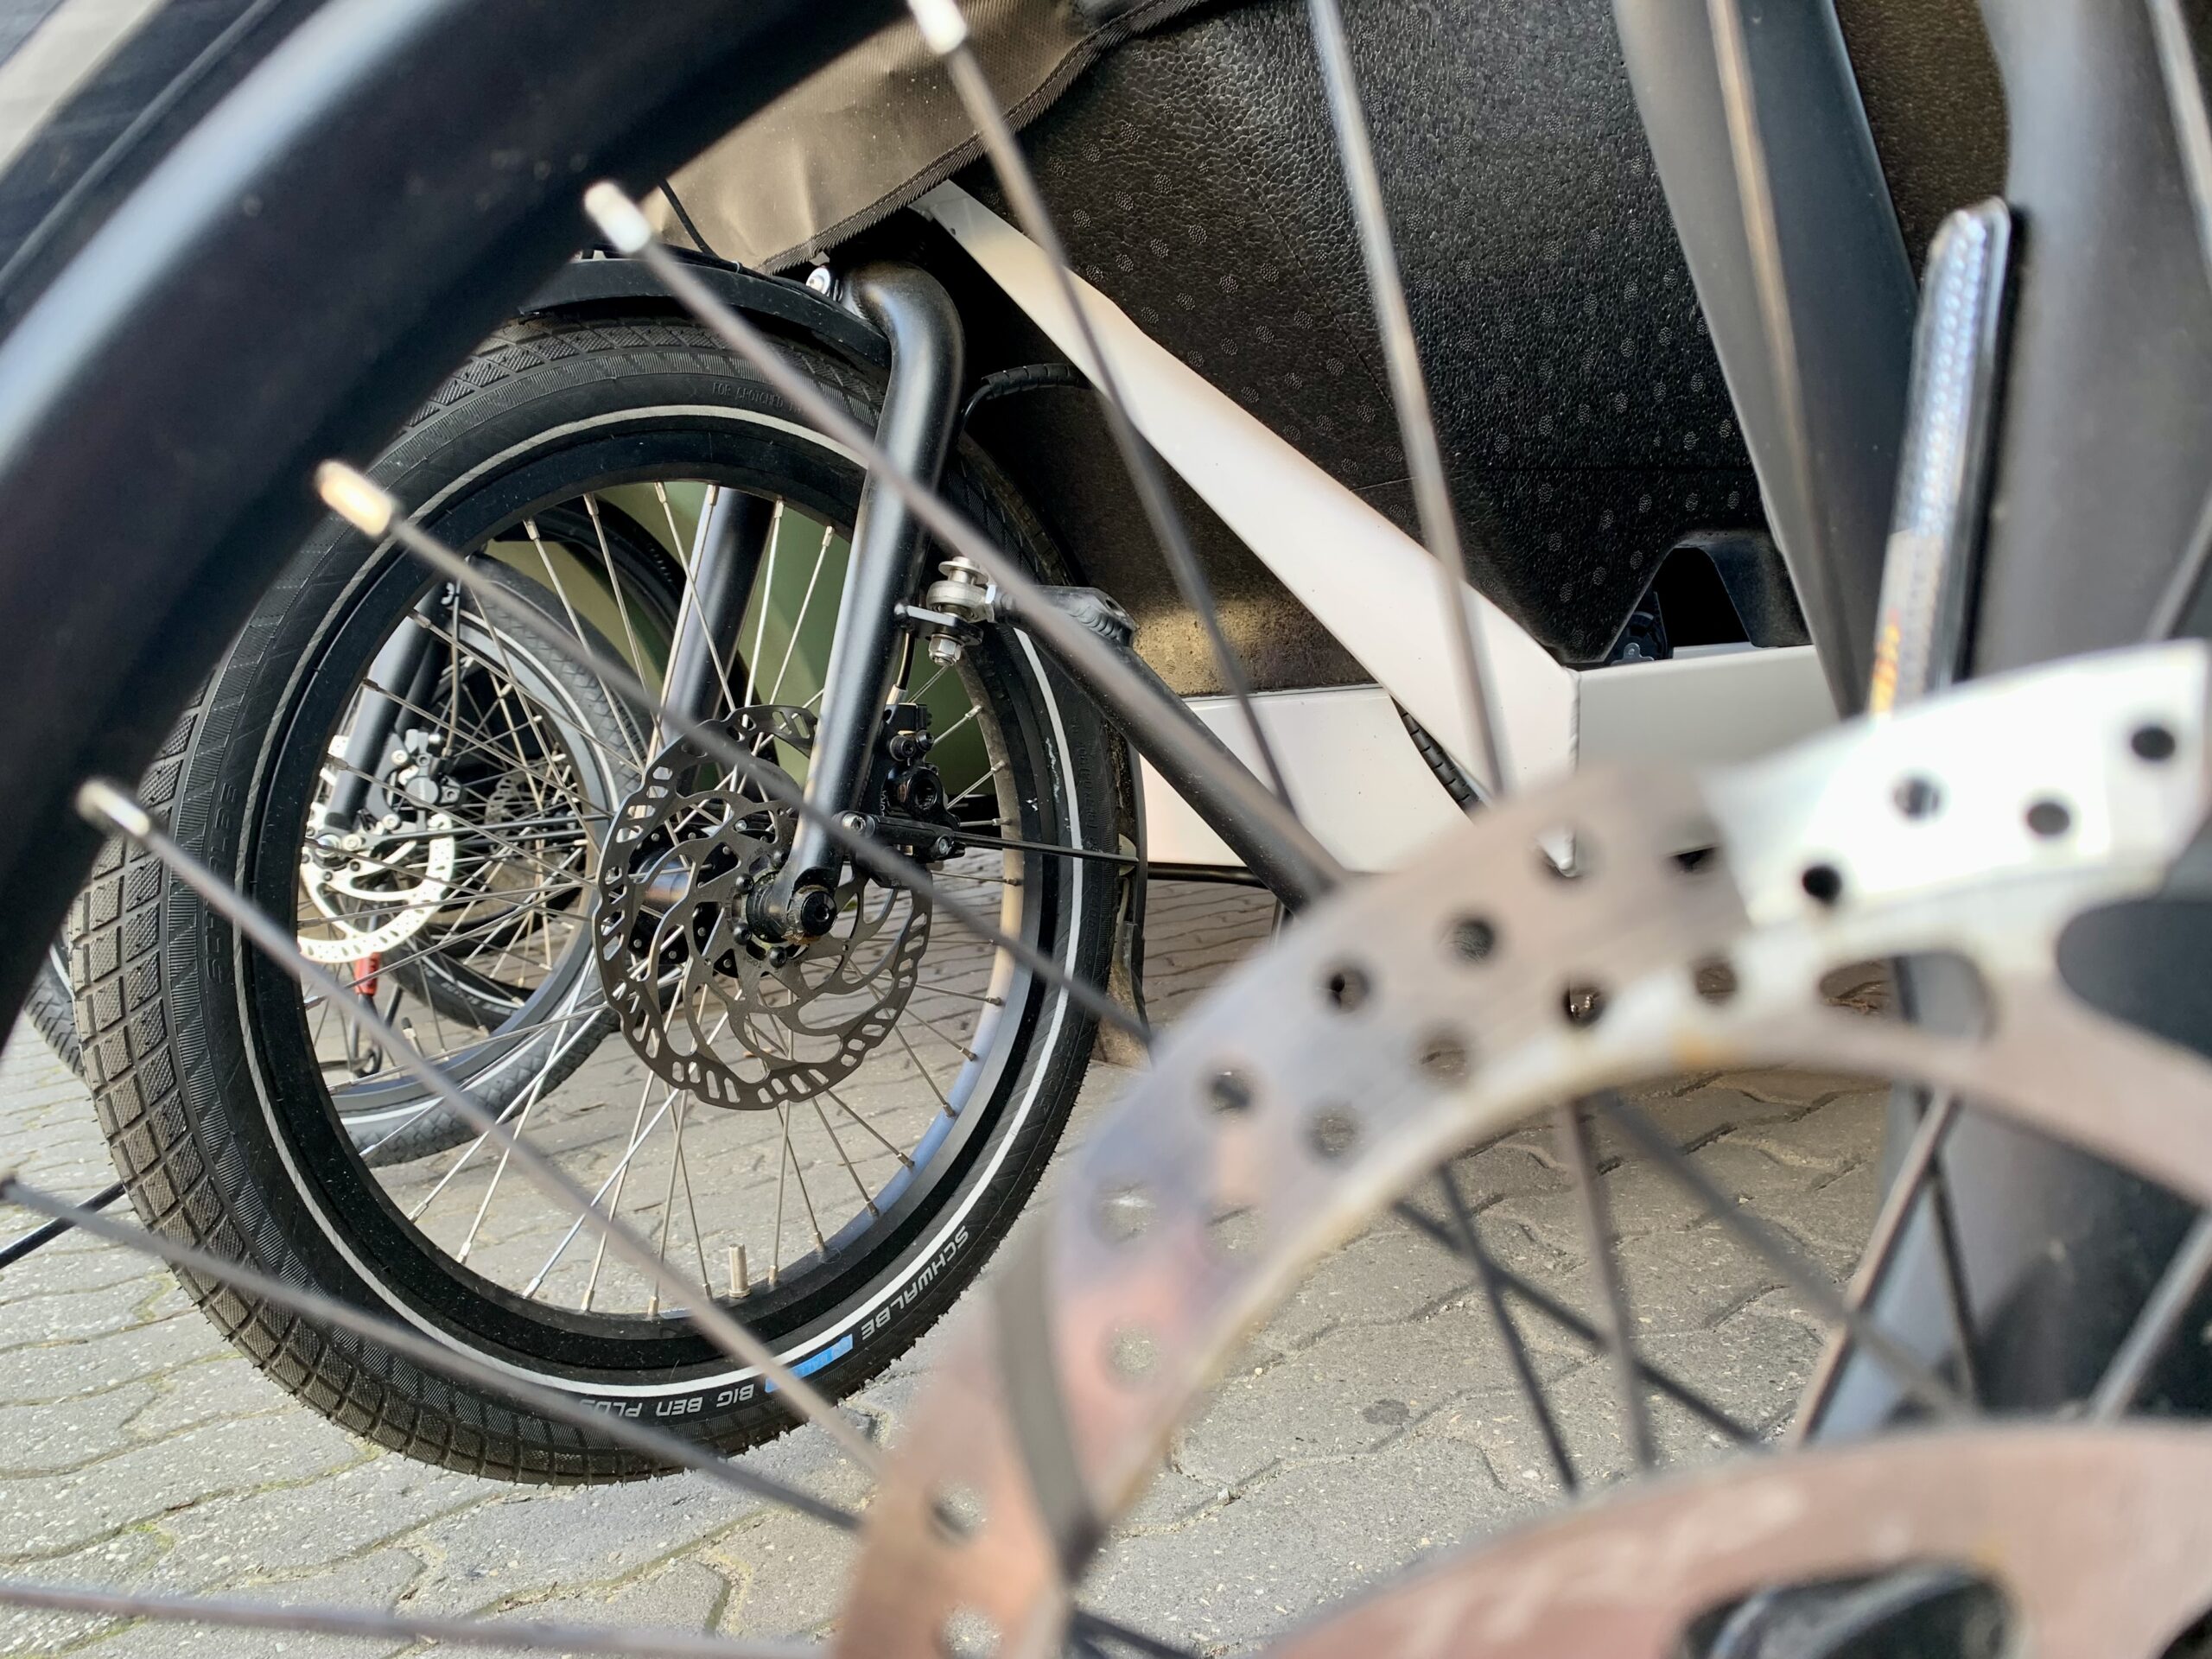 velotech.de collaborates on new cargo bike standard